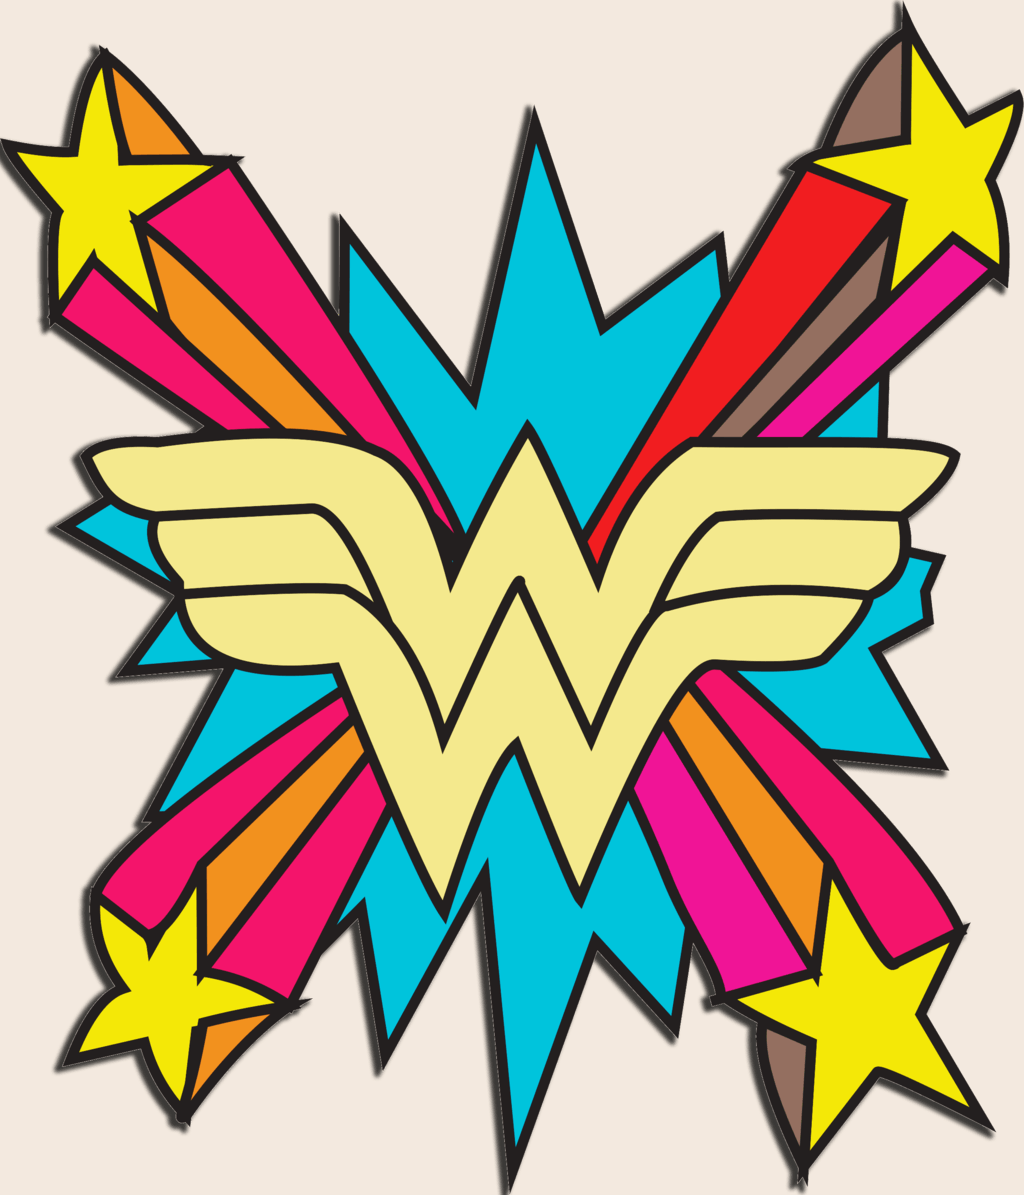 wonder woman logo. Logospike.com: Famous and Free Vector Logos